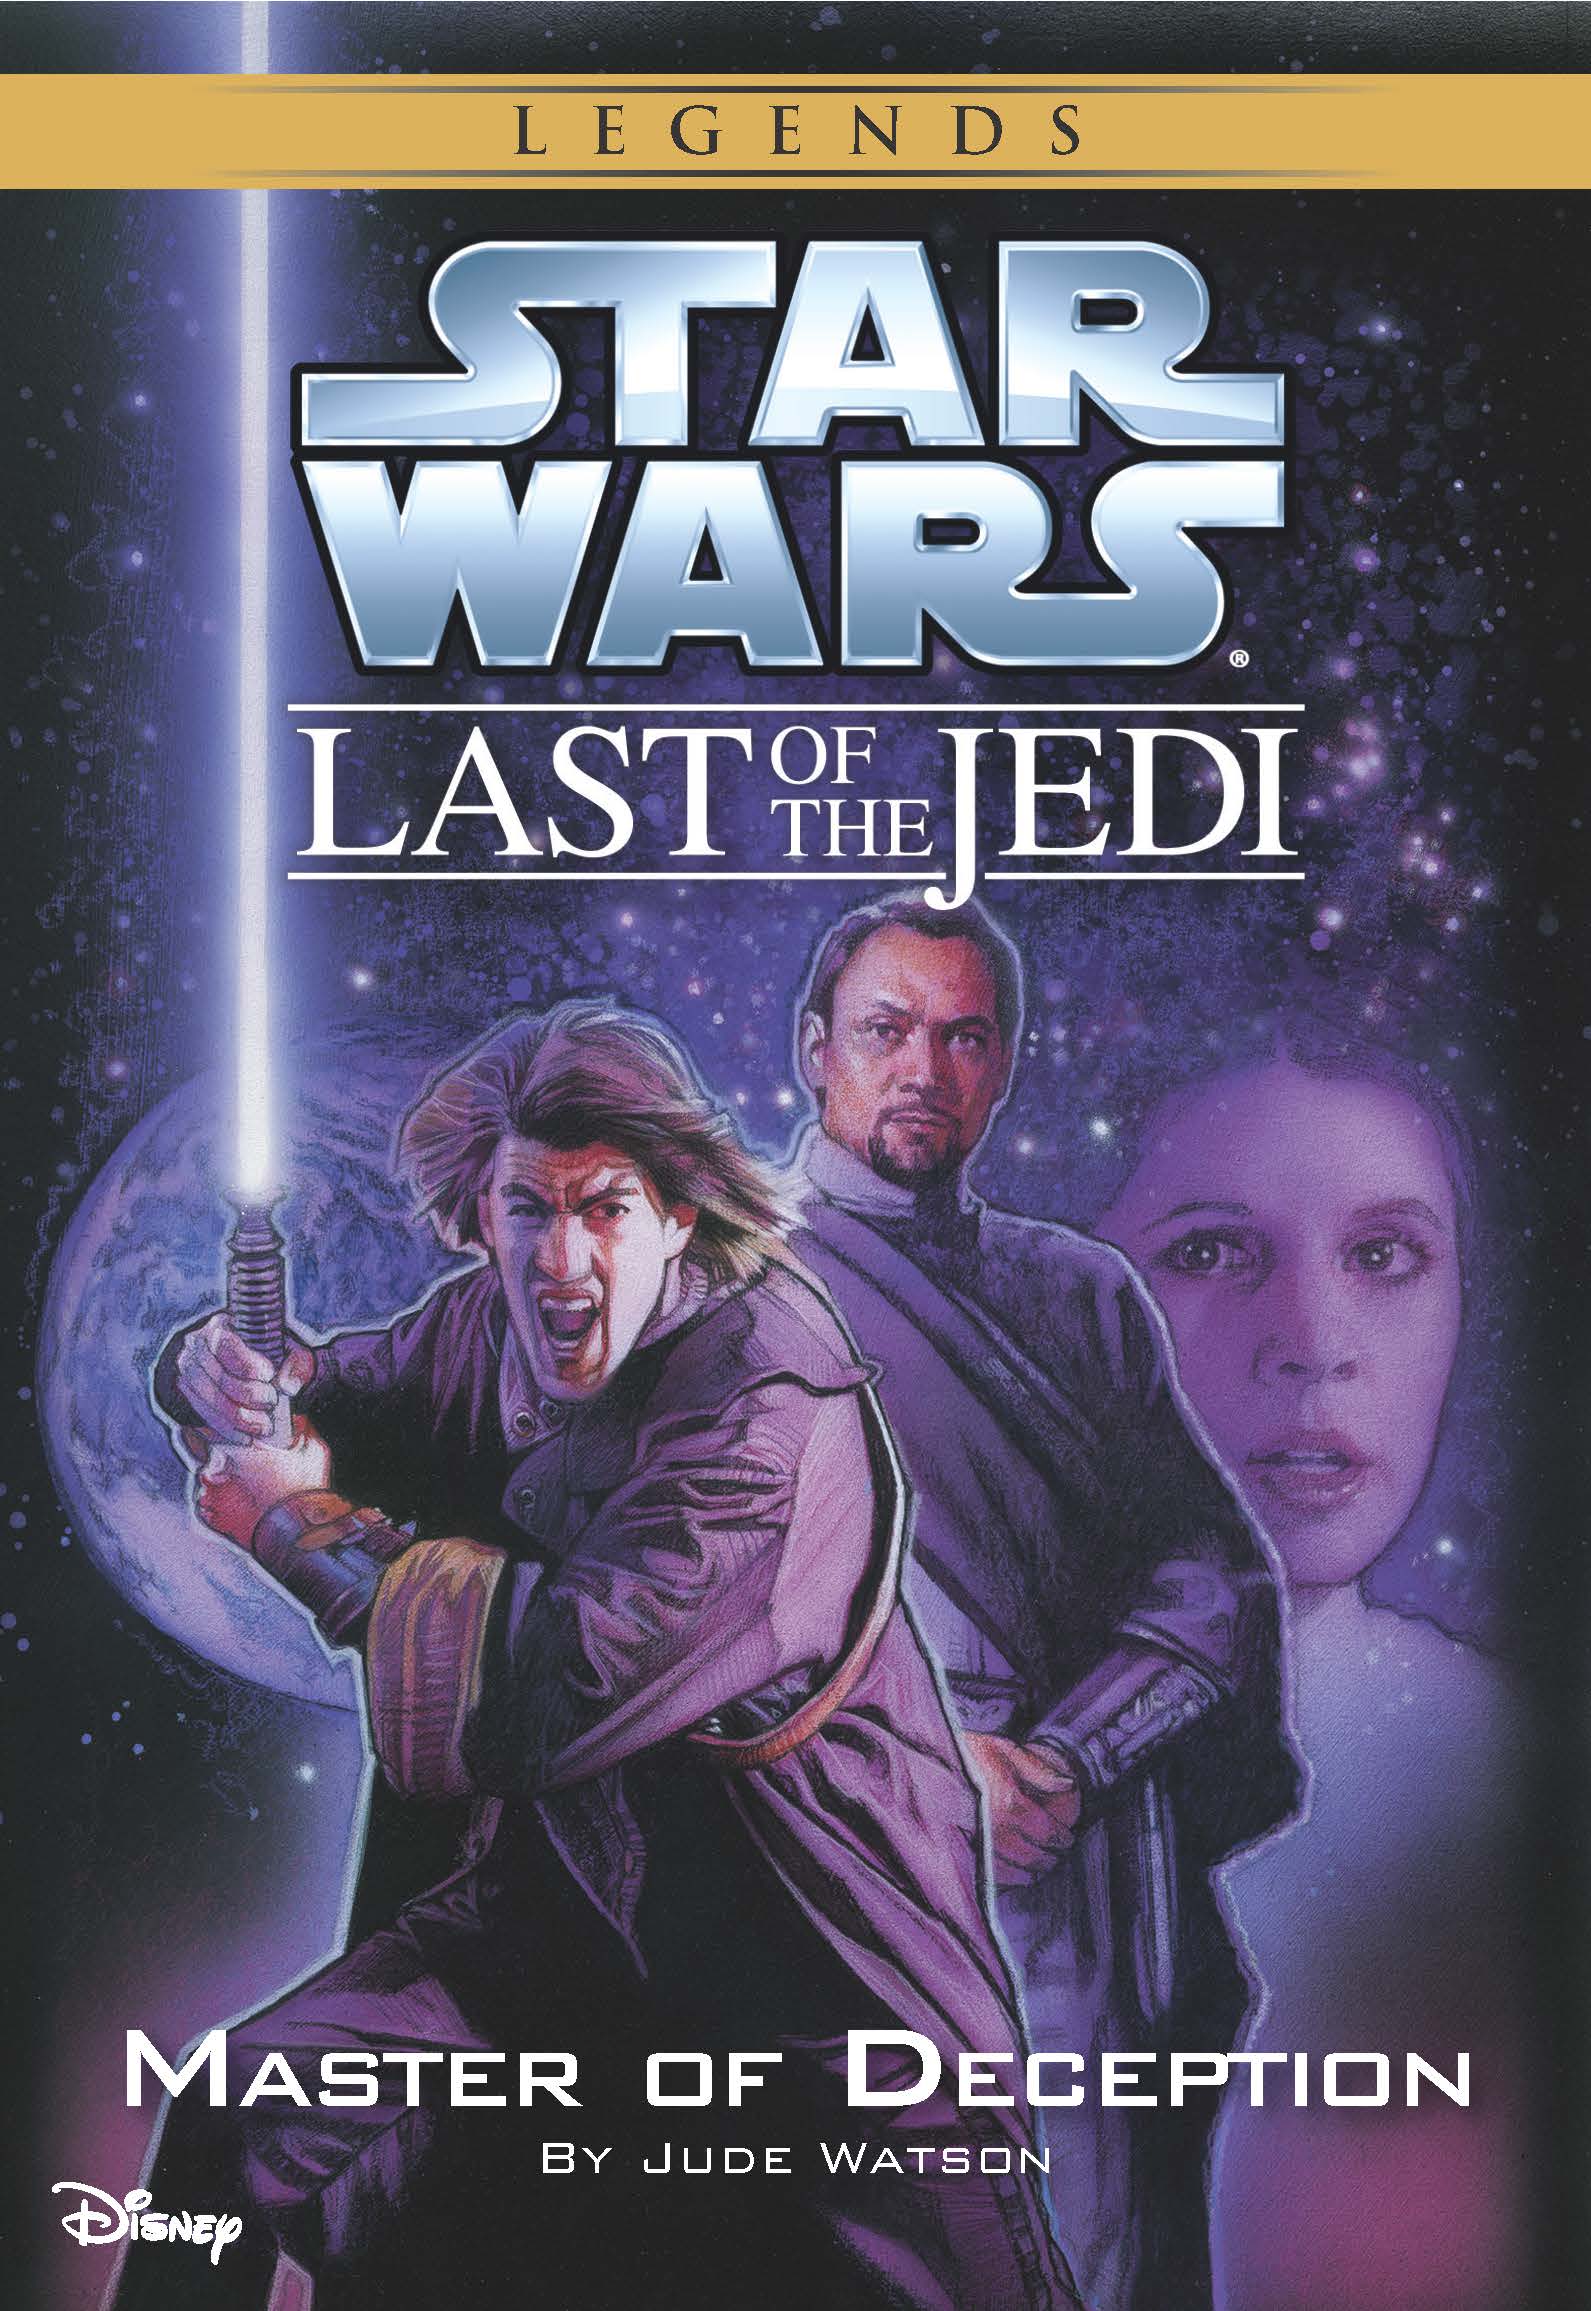 Reckoning (Star Wars: Last of the Jedi, Book 10)